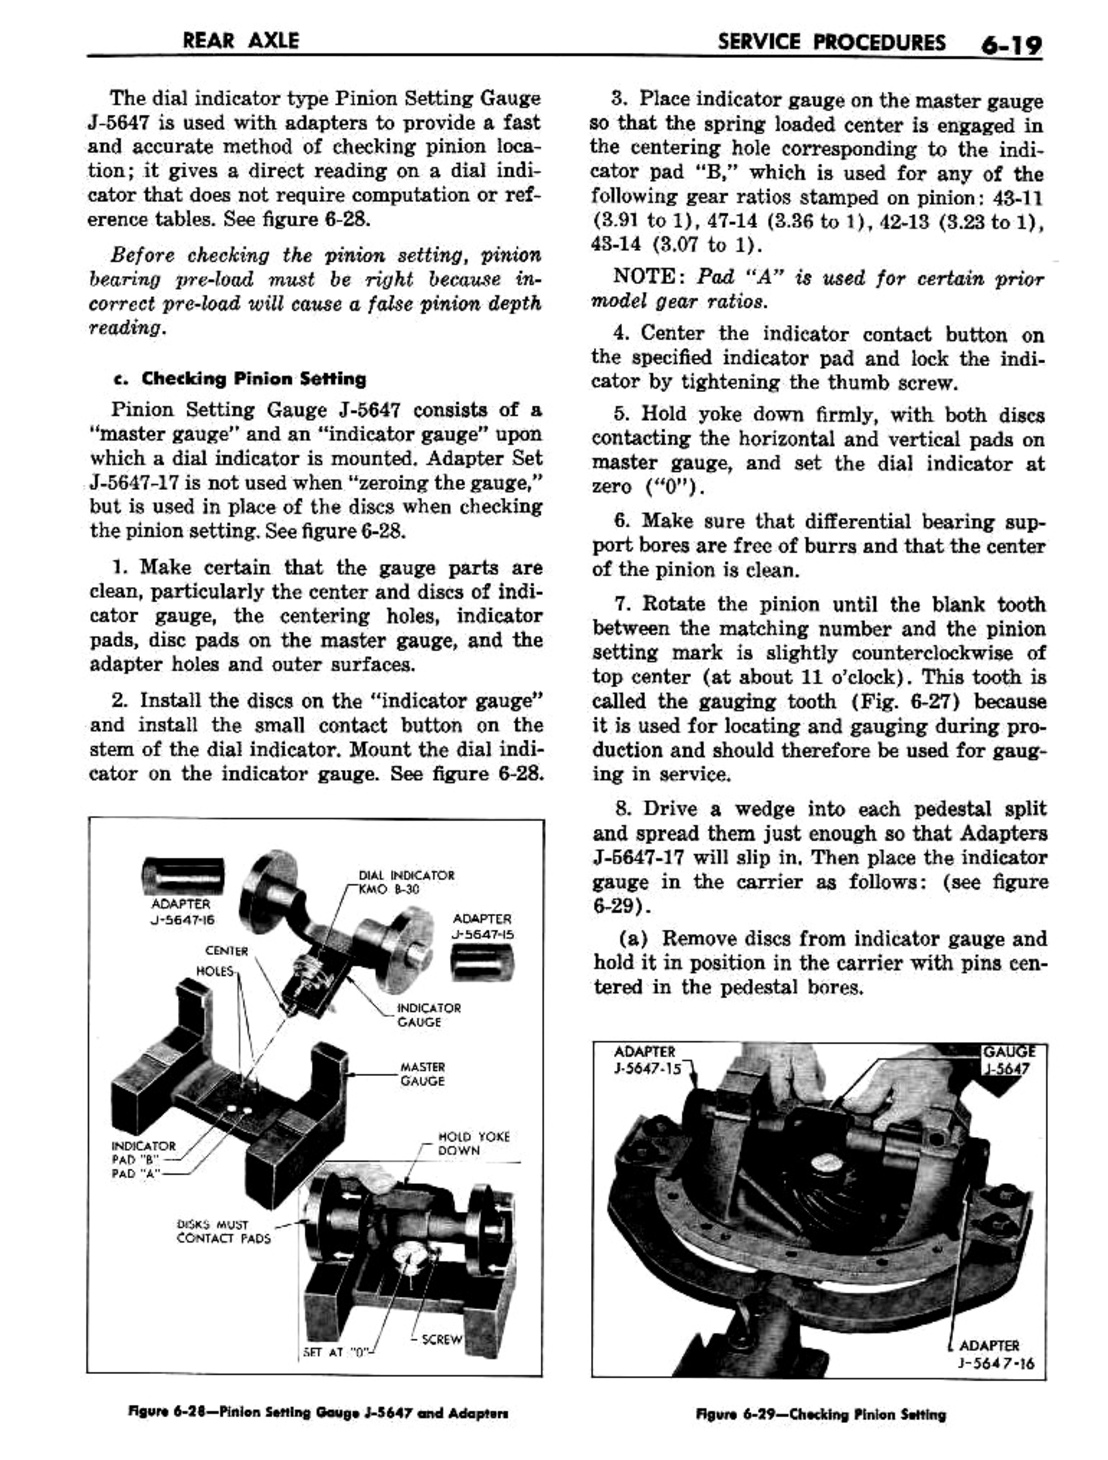 n_07 1960 Buick Shop Manual - Rear Axle-019-019.jpg